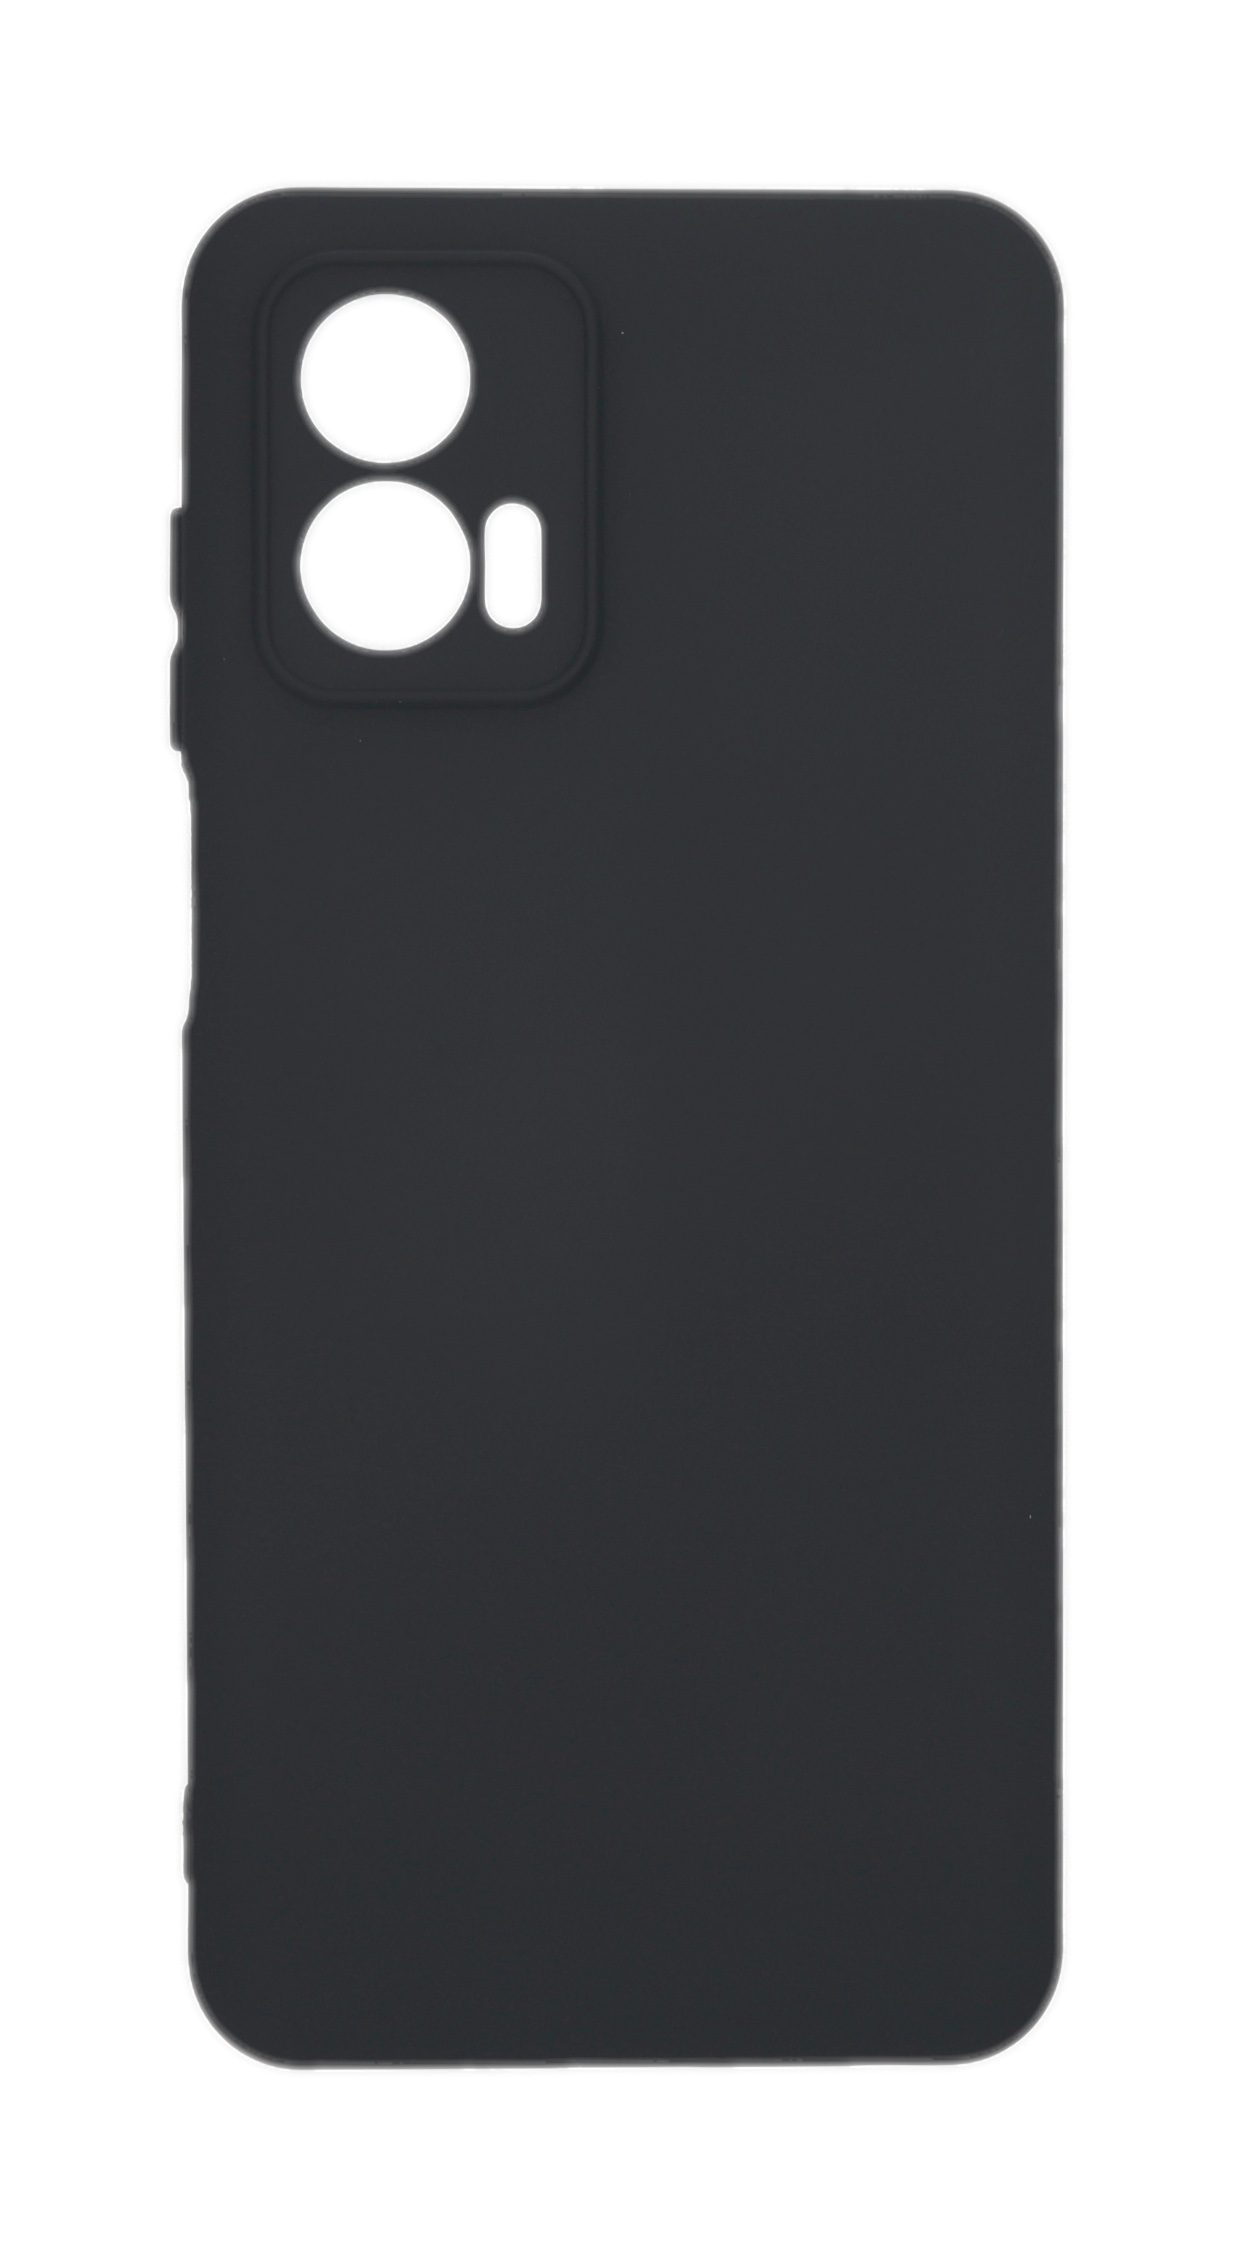 JAMCOVER Silikon Case, 5G, moto Schwarz Backcover, g73 Motorola